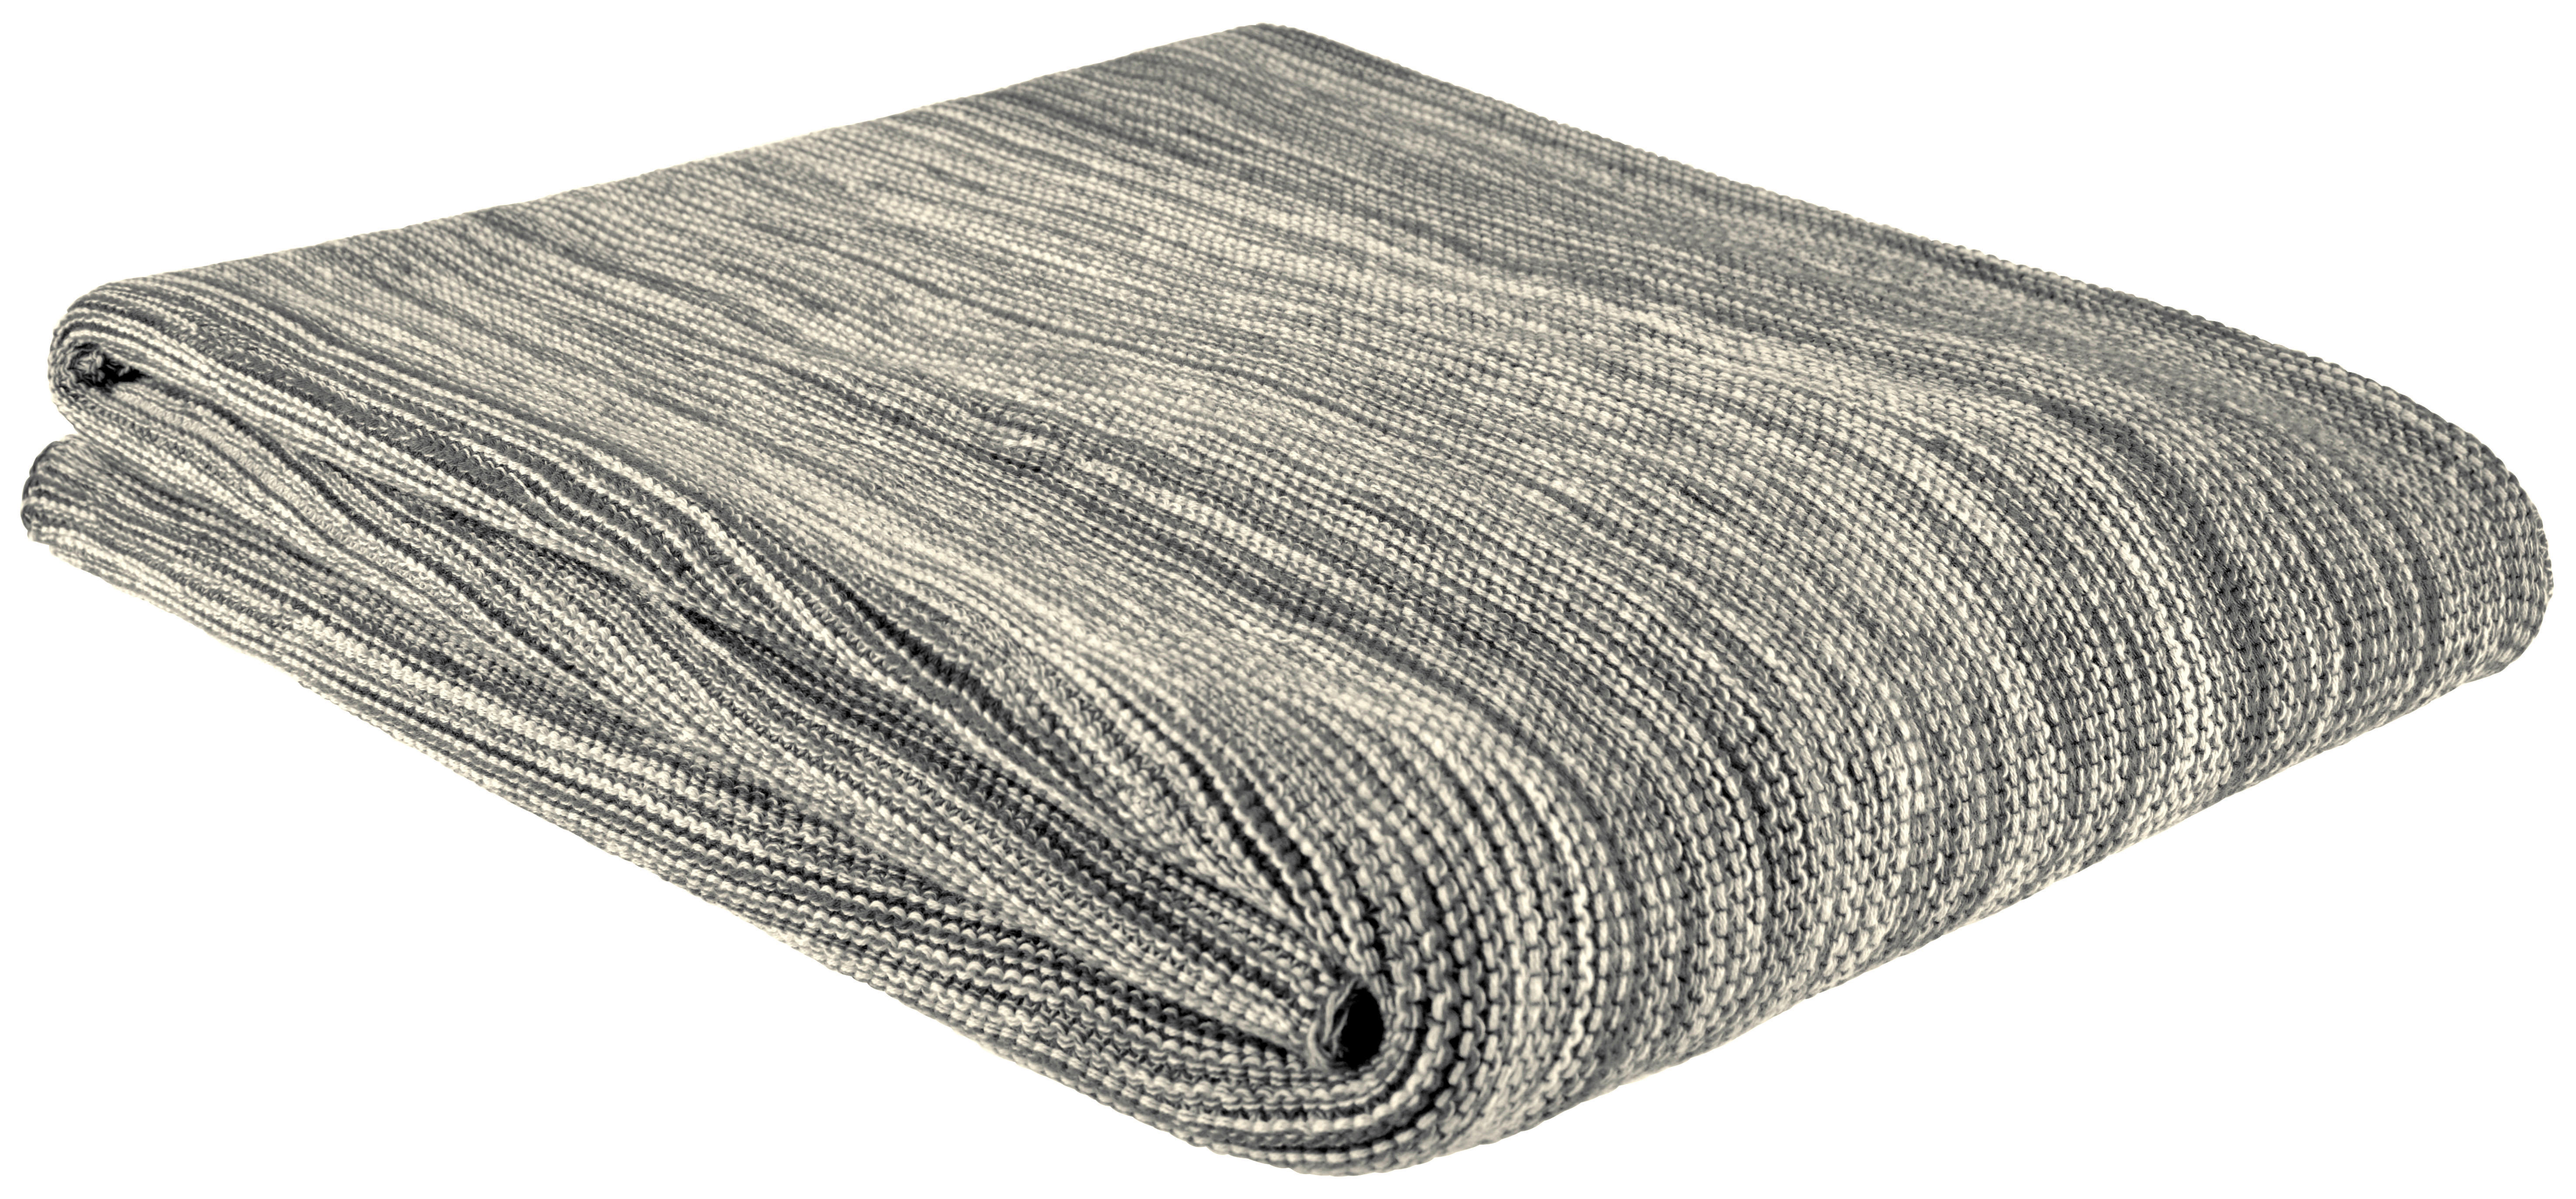 PREKRIVAČ 130/170 cm  - tamno siva, Konvencionalno, tekstil (130/170cm) - Bio:Vio